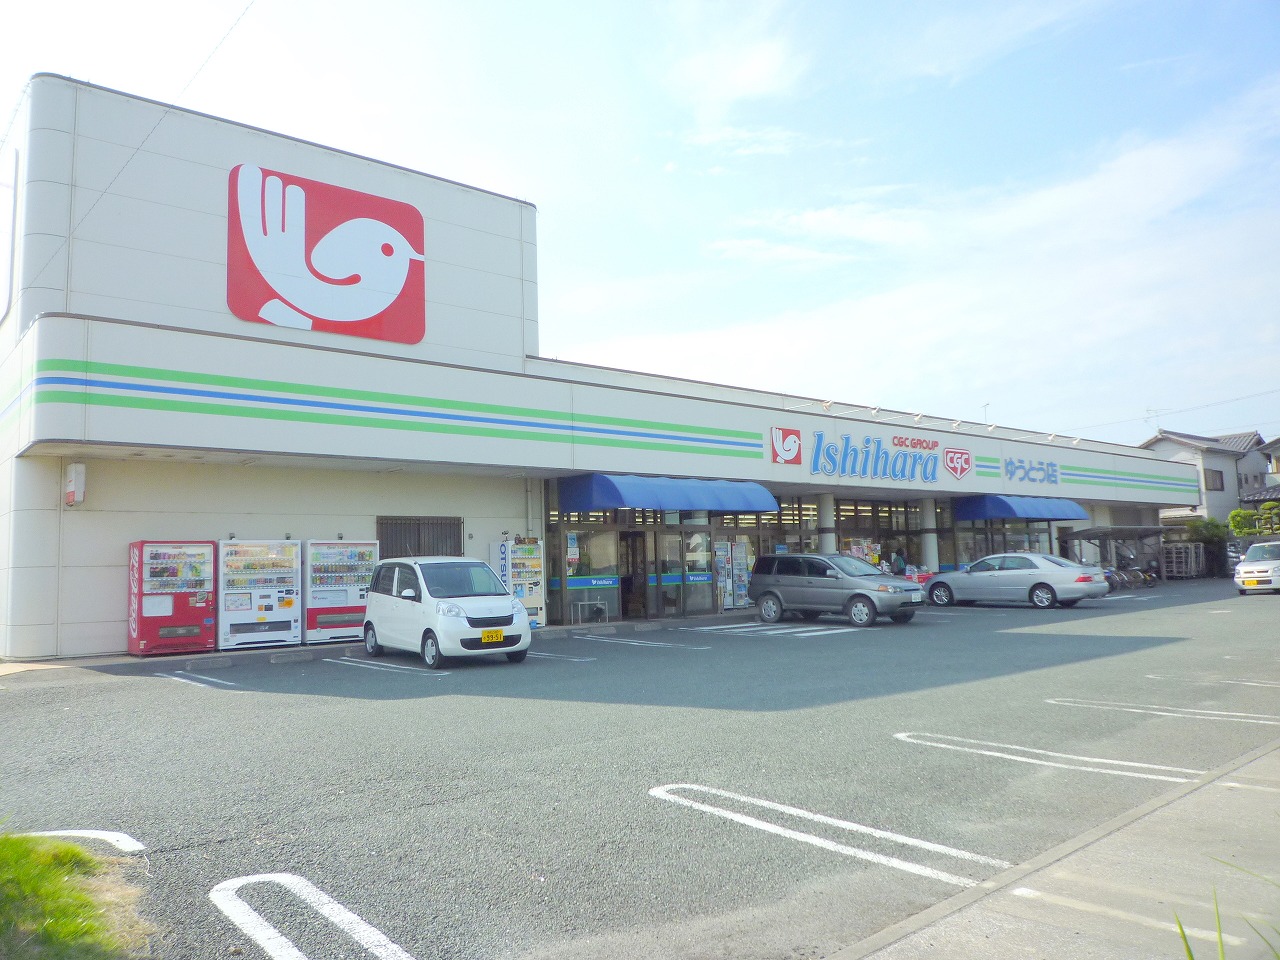 Supermarket. 528m to Super Ishihara Yuto store (Super)